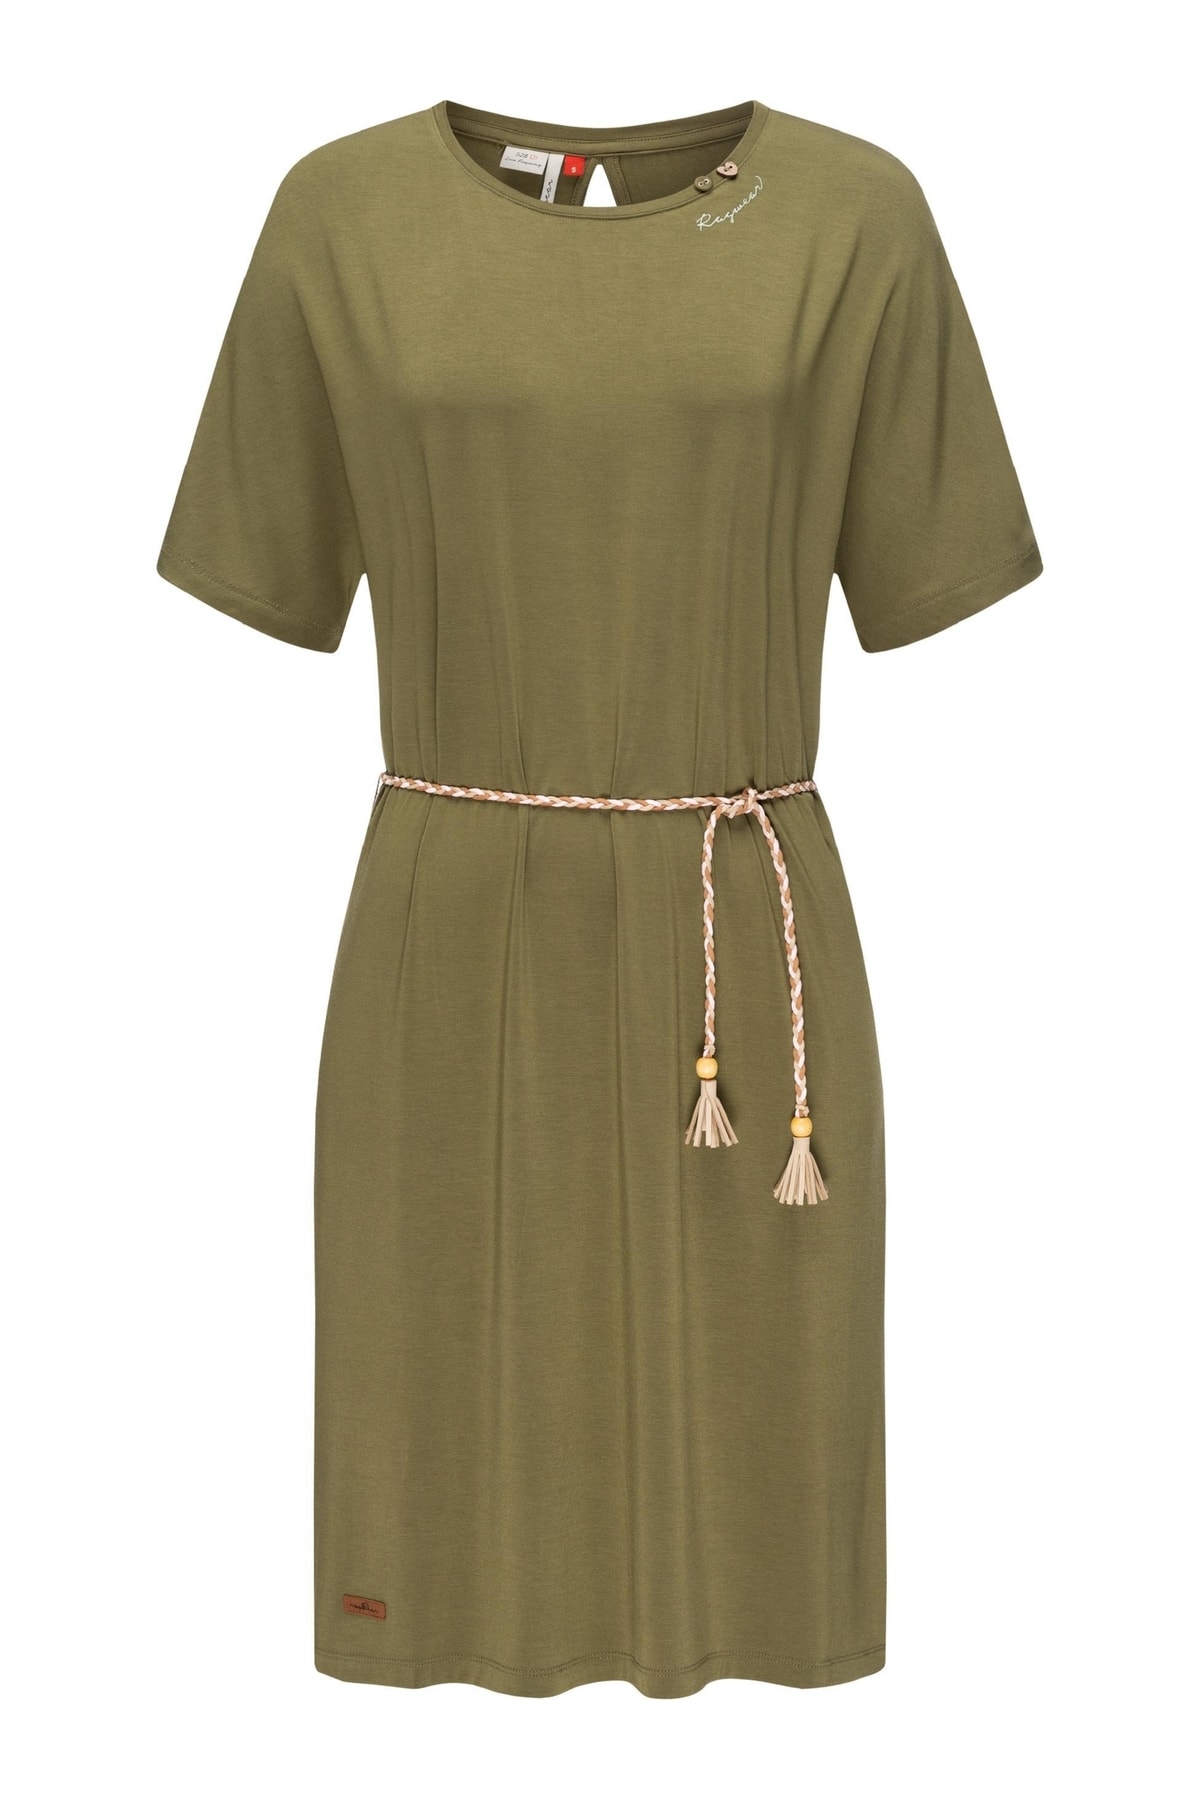 Ragwear Kleid Grün Jerseykleid Fast ausverkauft OB7939